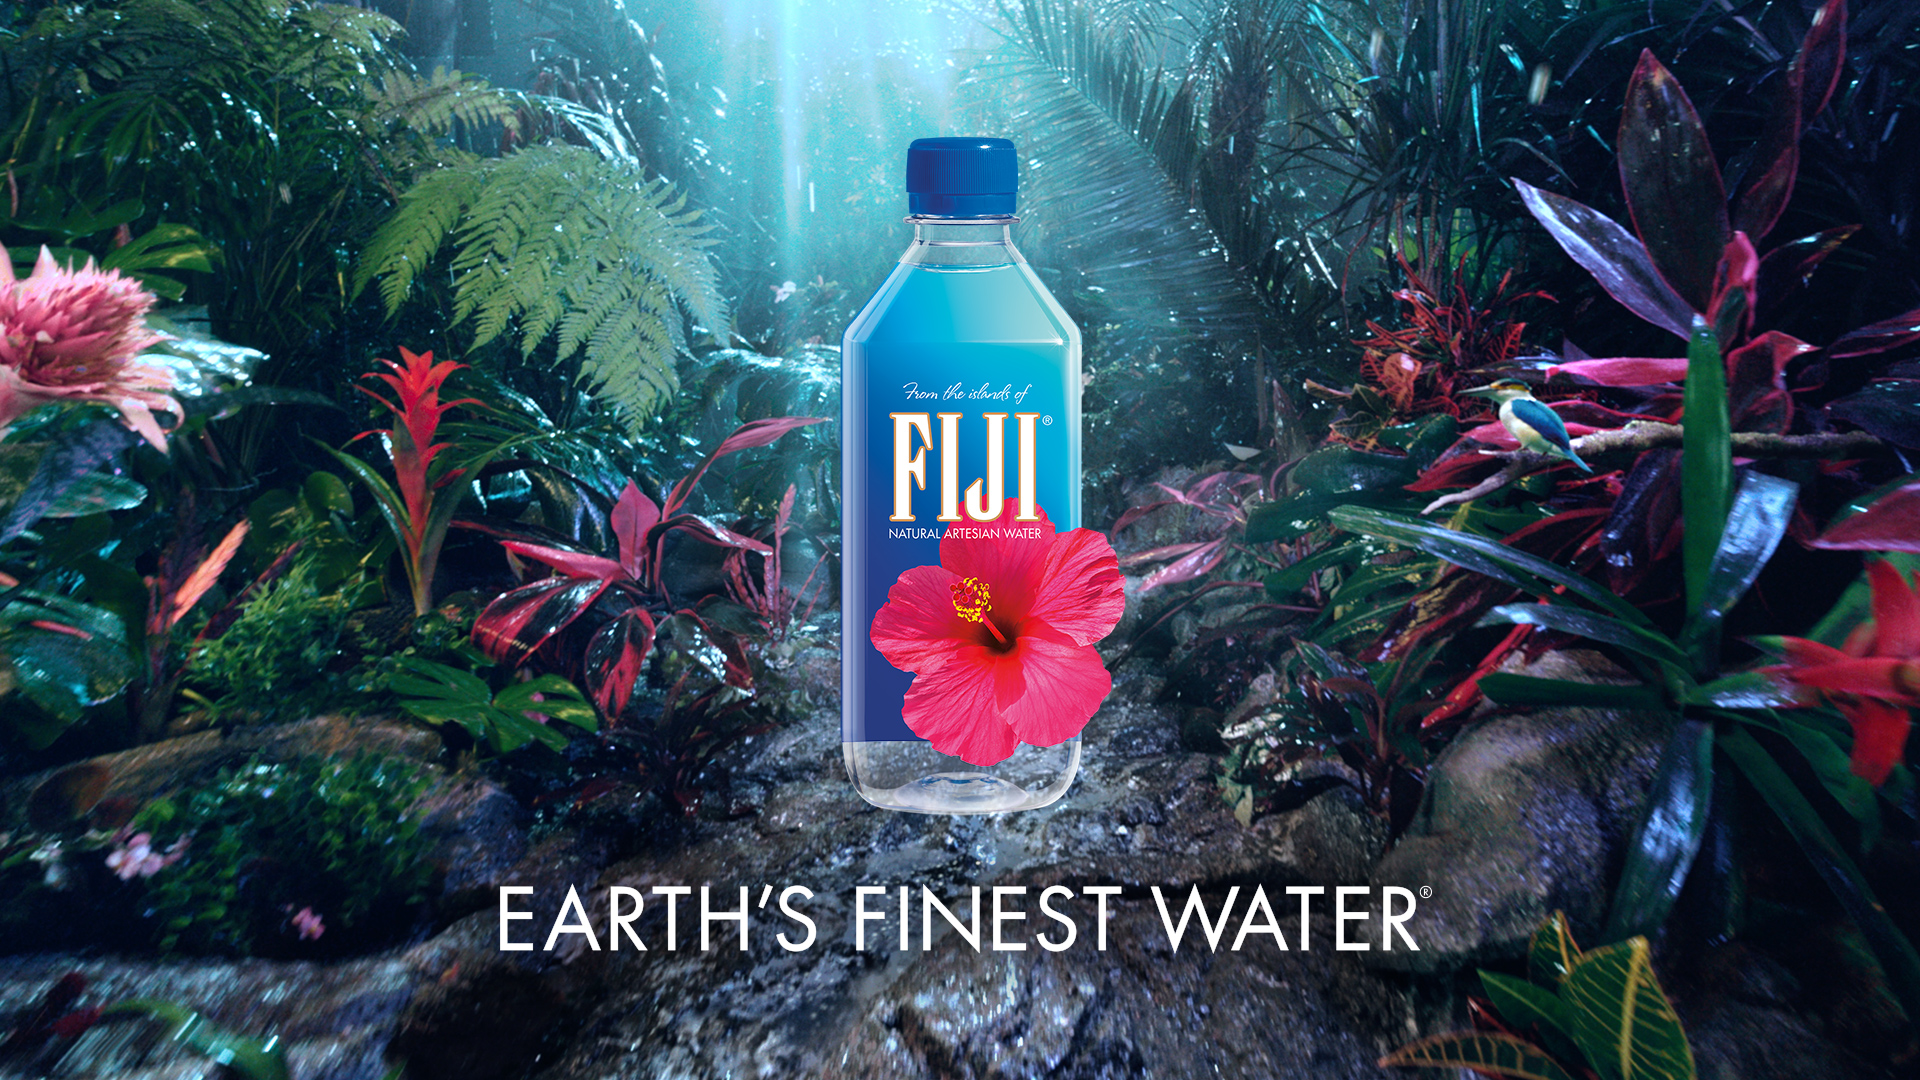 Free download FIJI Water on Every drop of FIJI Water filters through